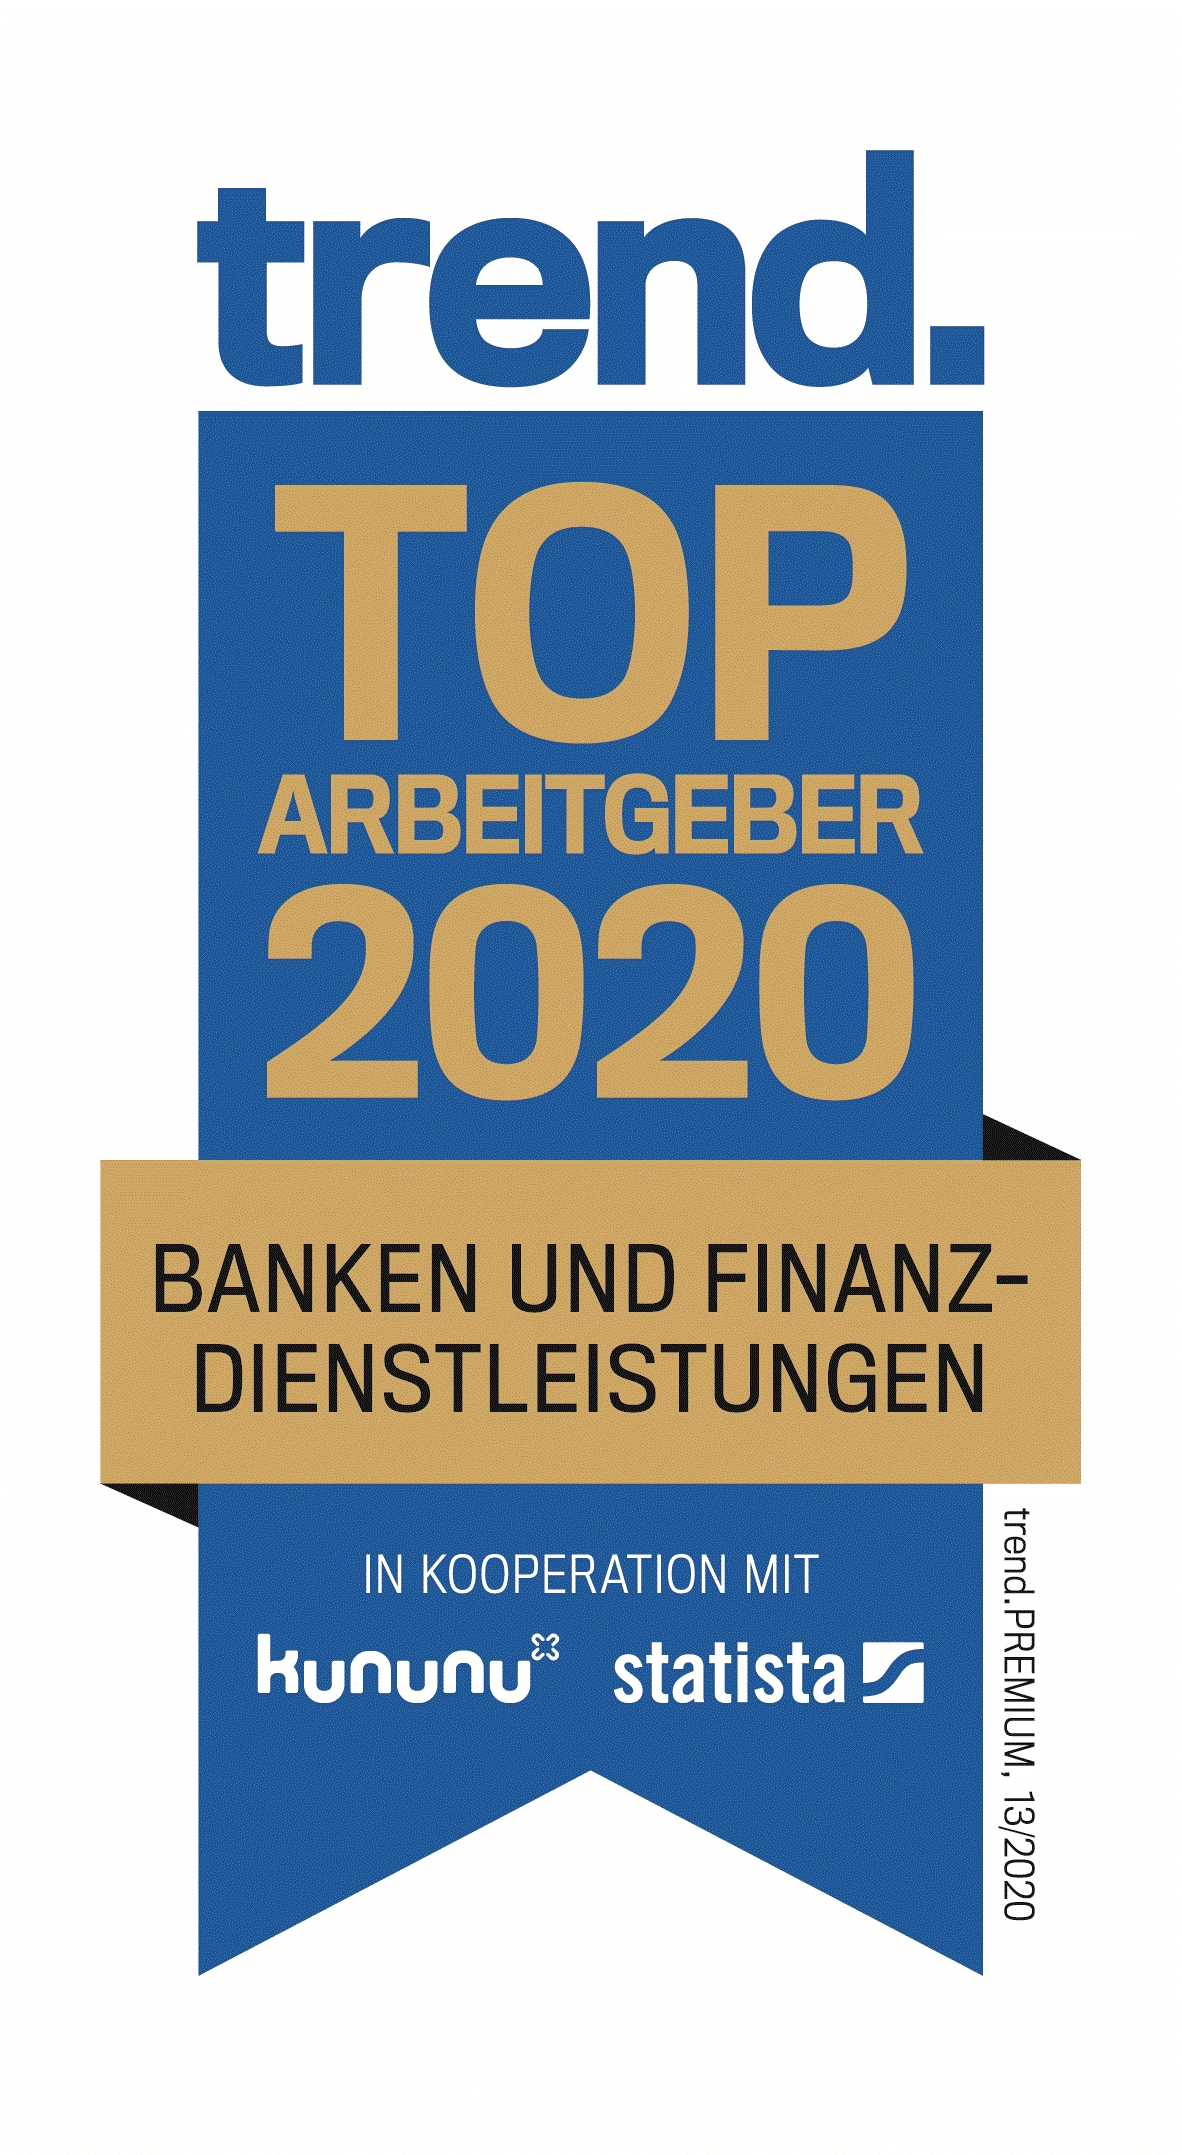 Top Arbeitgeber 2020 ©BB